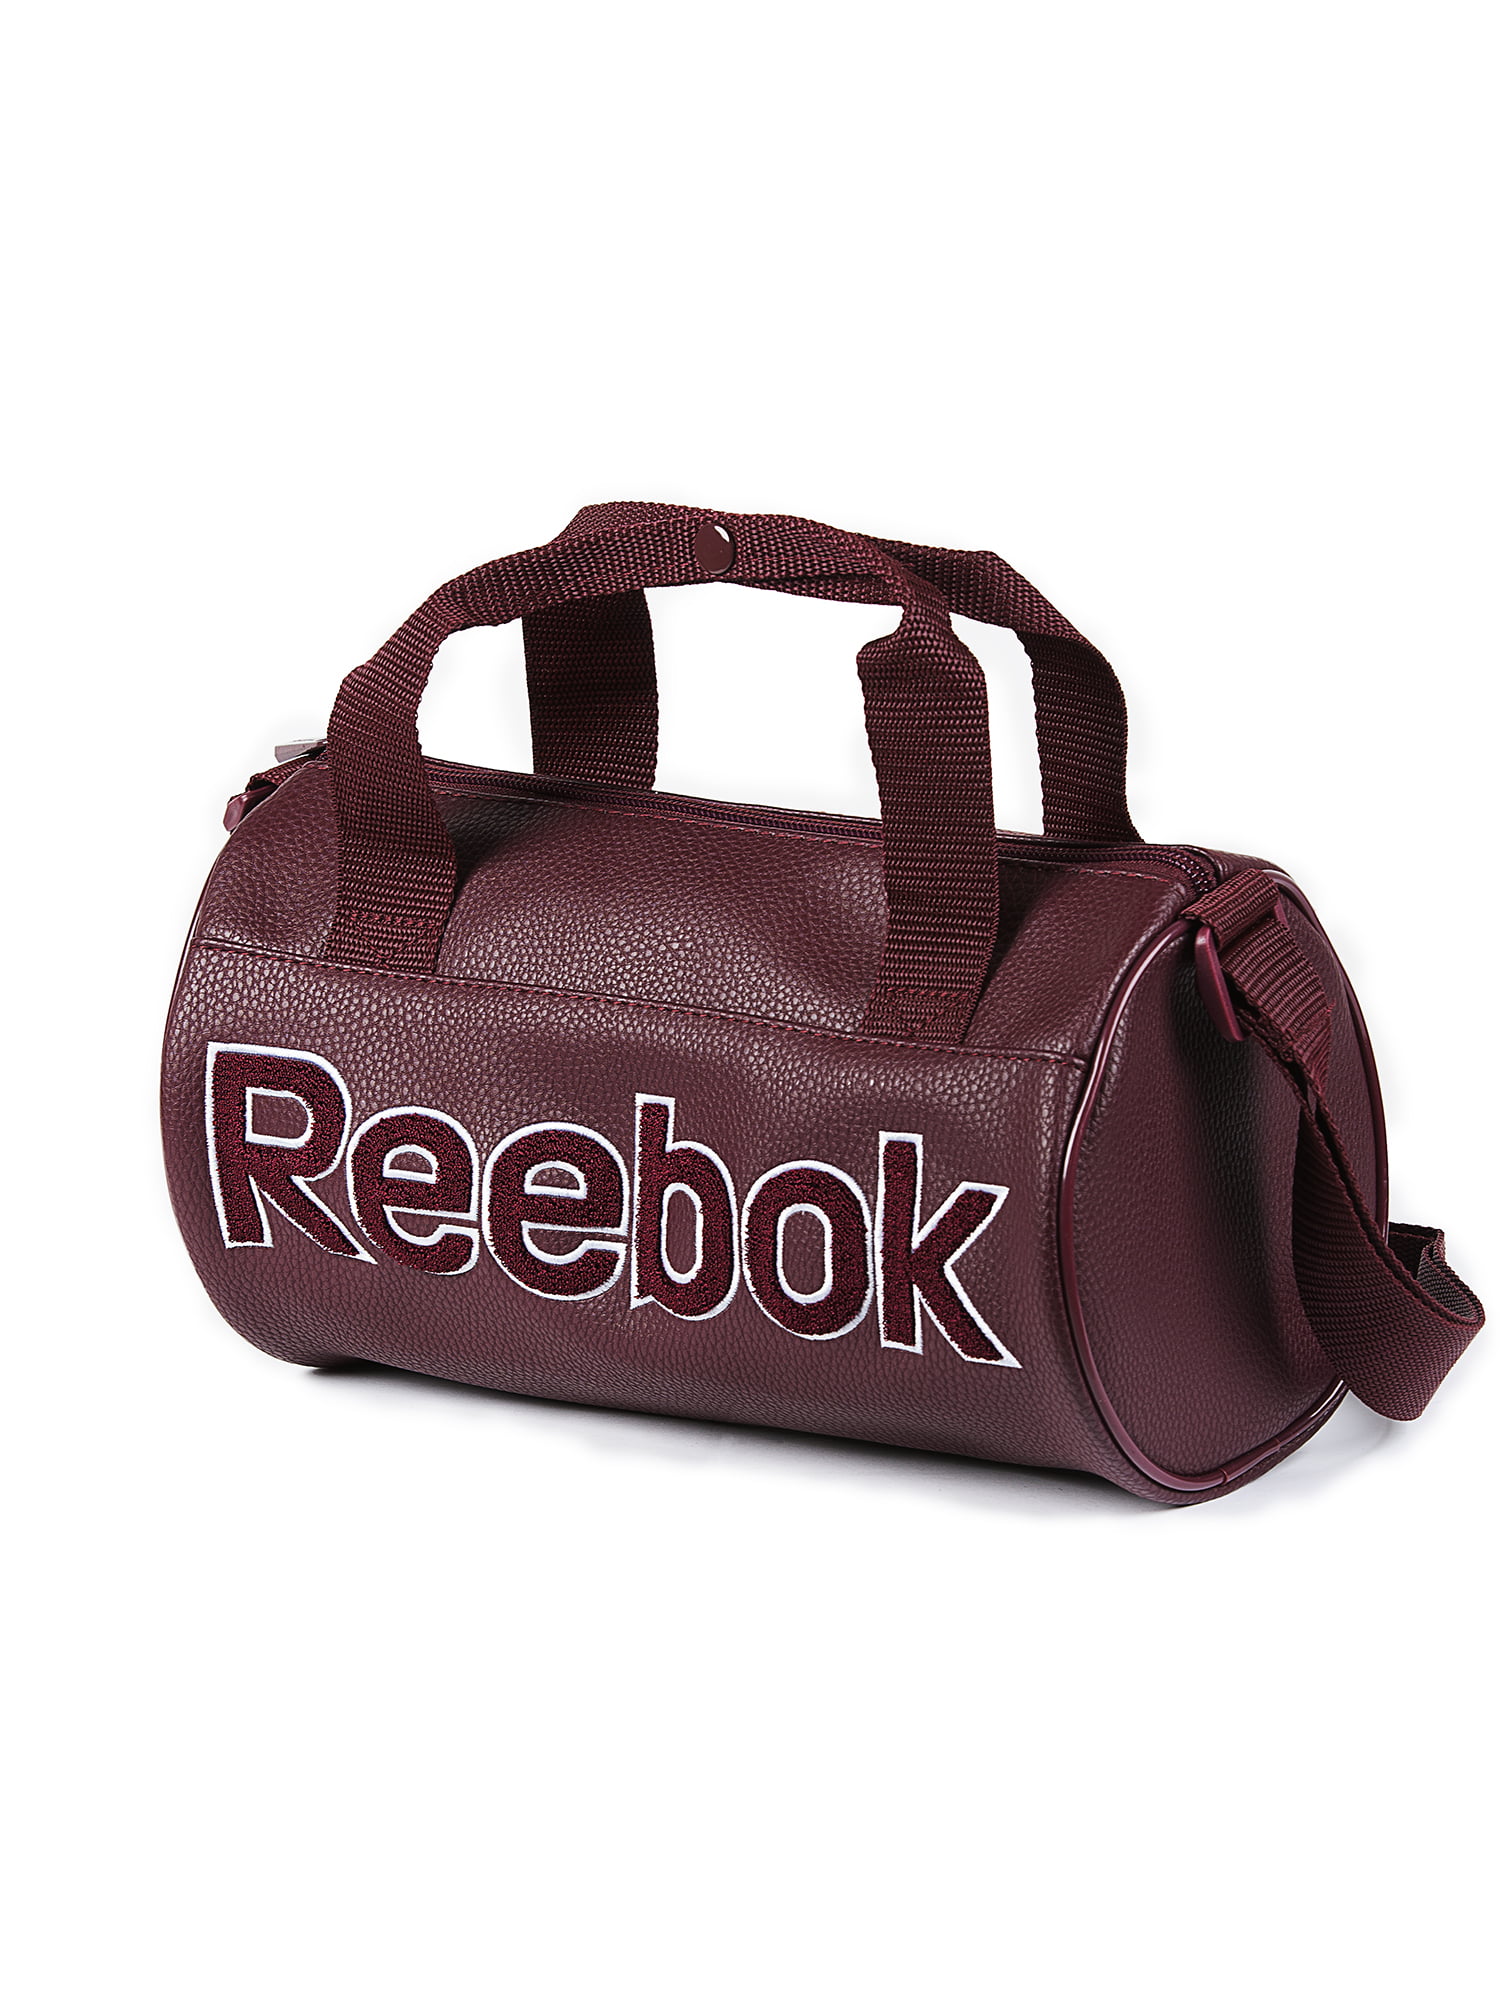 Reebok Women's Duffle Beatrice Tote Handbag, Black Leopard